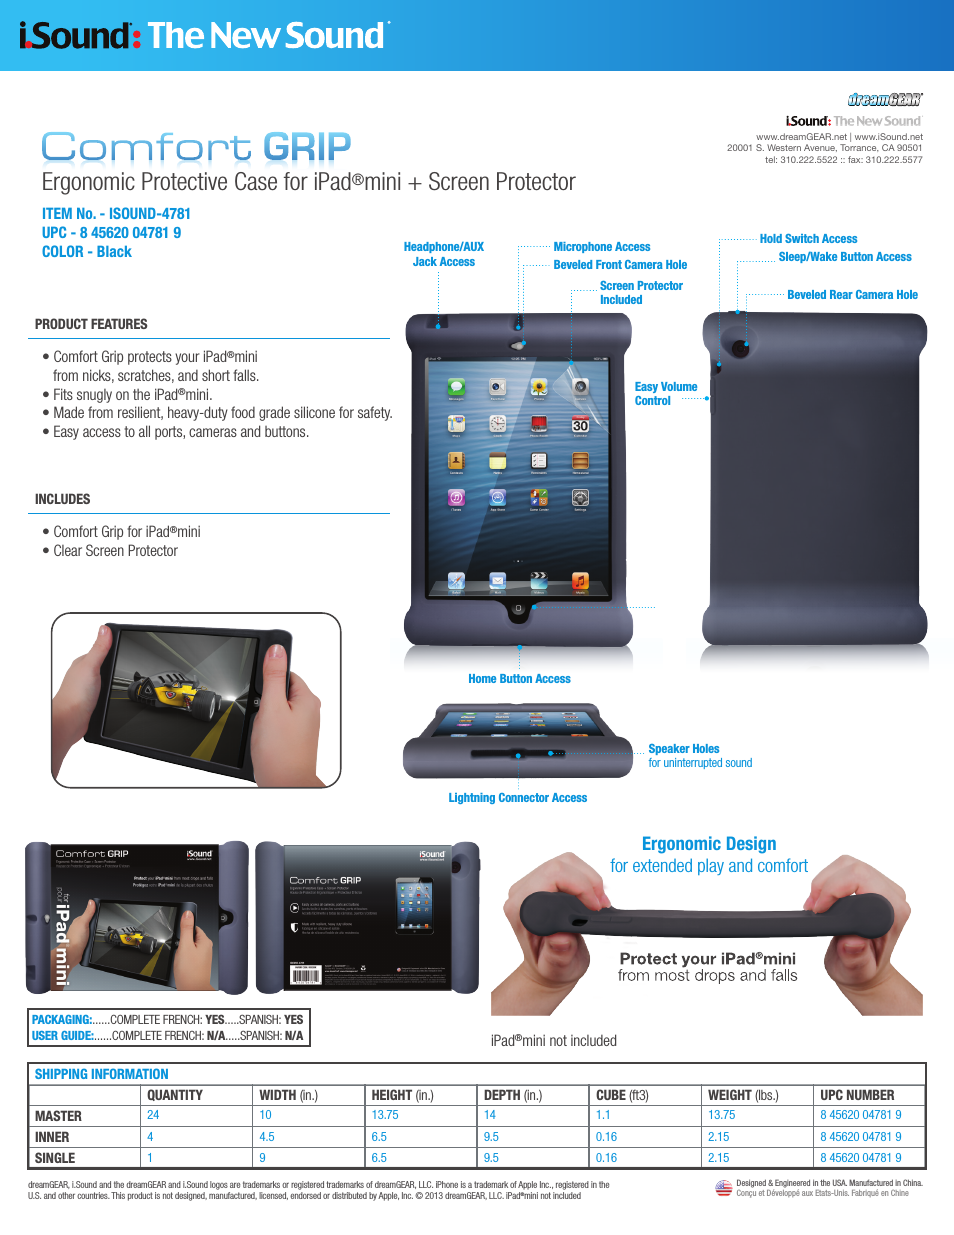 Comfort Grip for iPadmini + Screen Protector - Sell Sheet